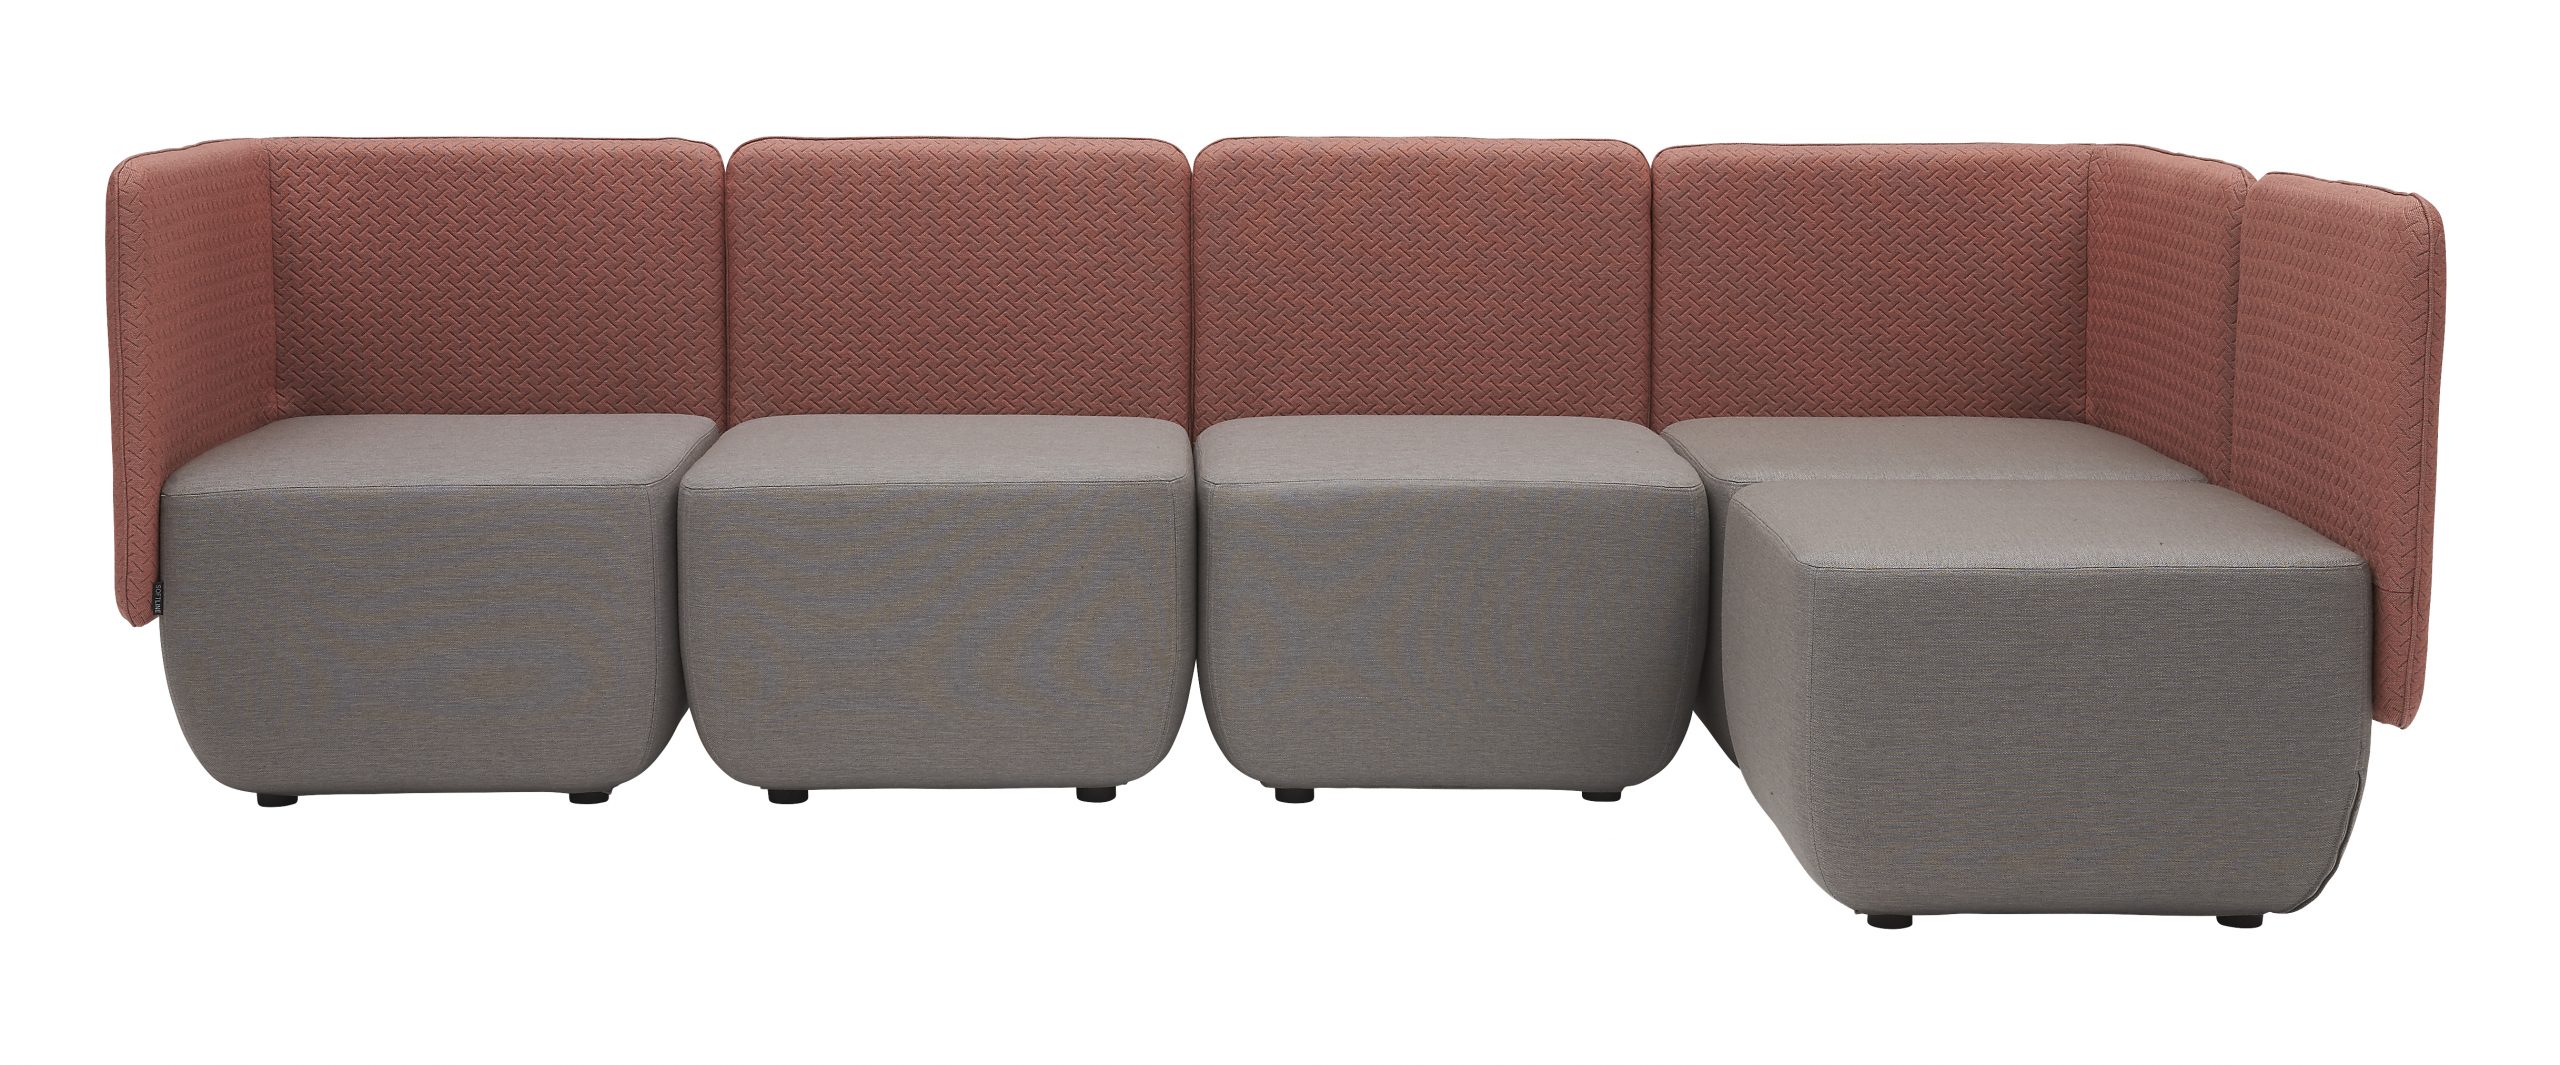 opera-modular-sofa-high-res-25-scaled.jpg